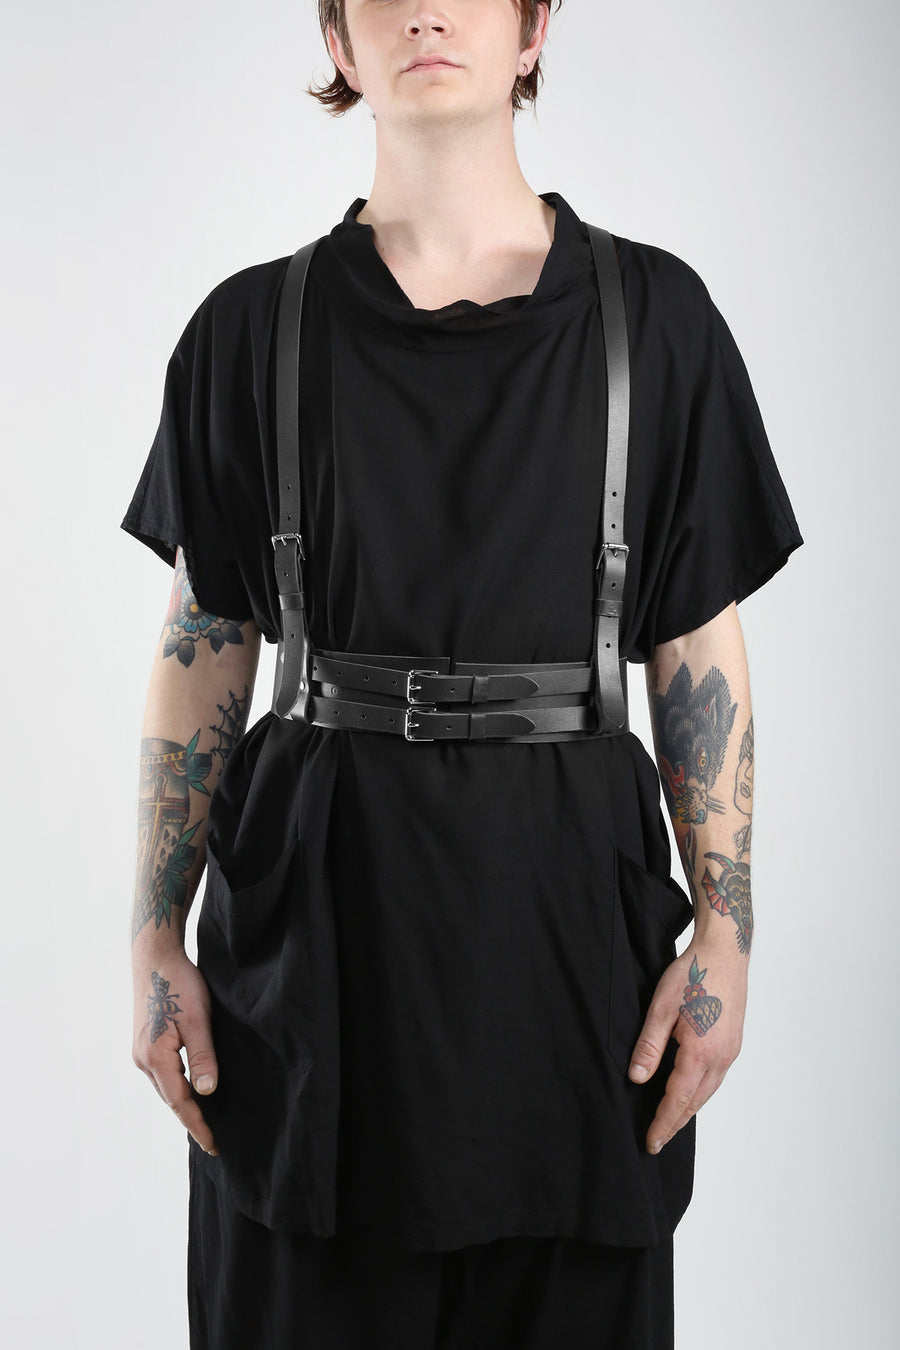 Elliot Premium Belted Harness - JAKIMAC
 - 1